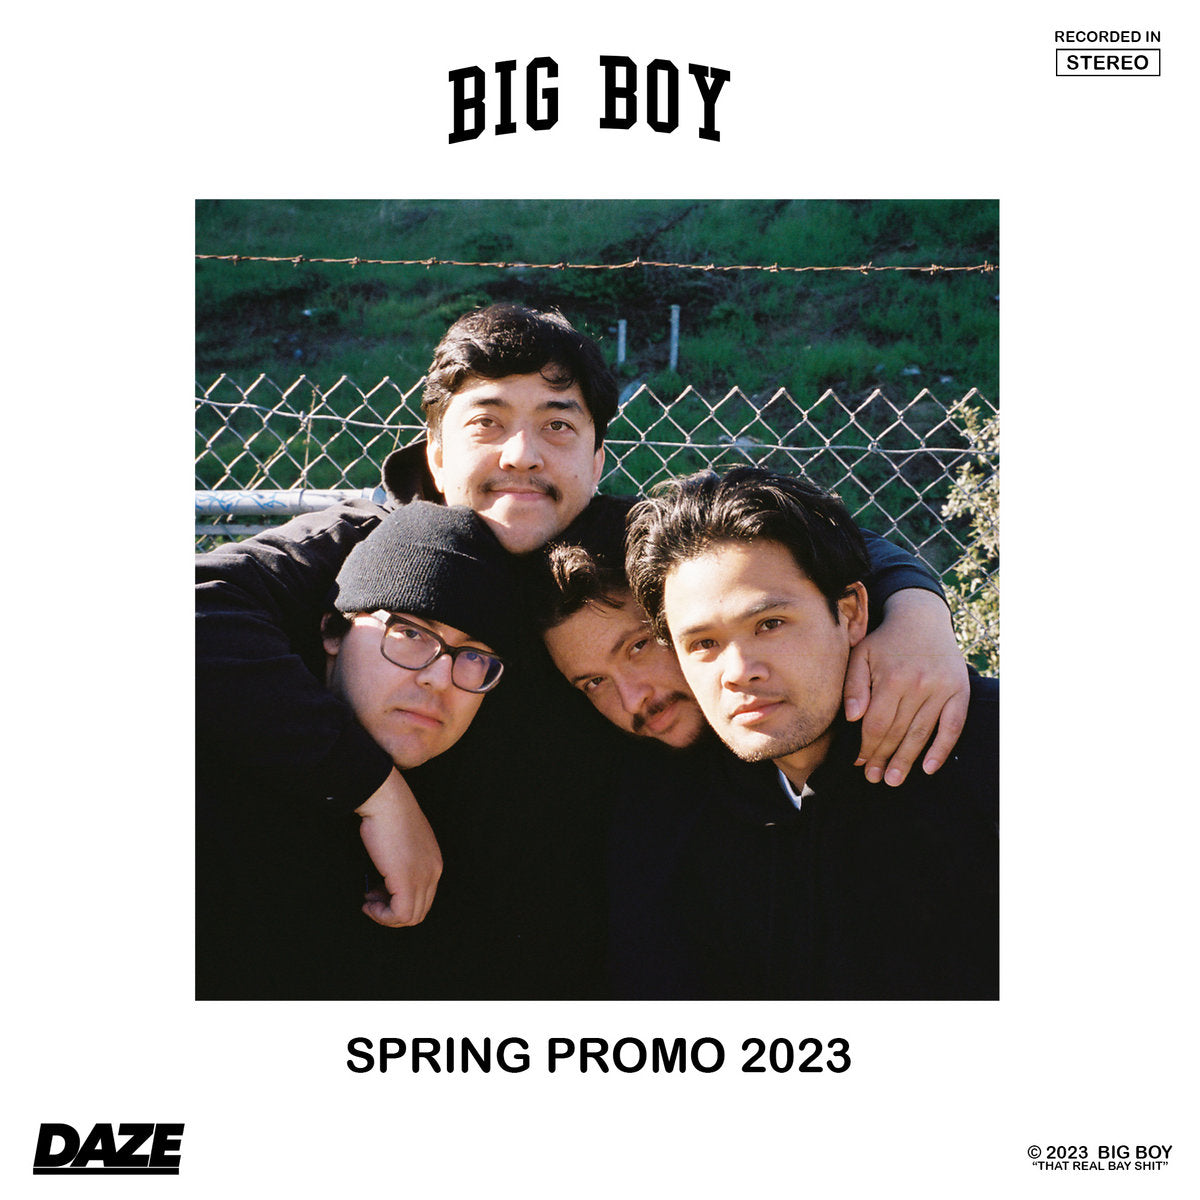 BIG BOY "Spring Promo 2023" 7"